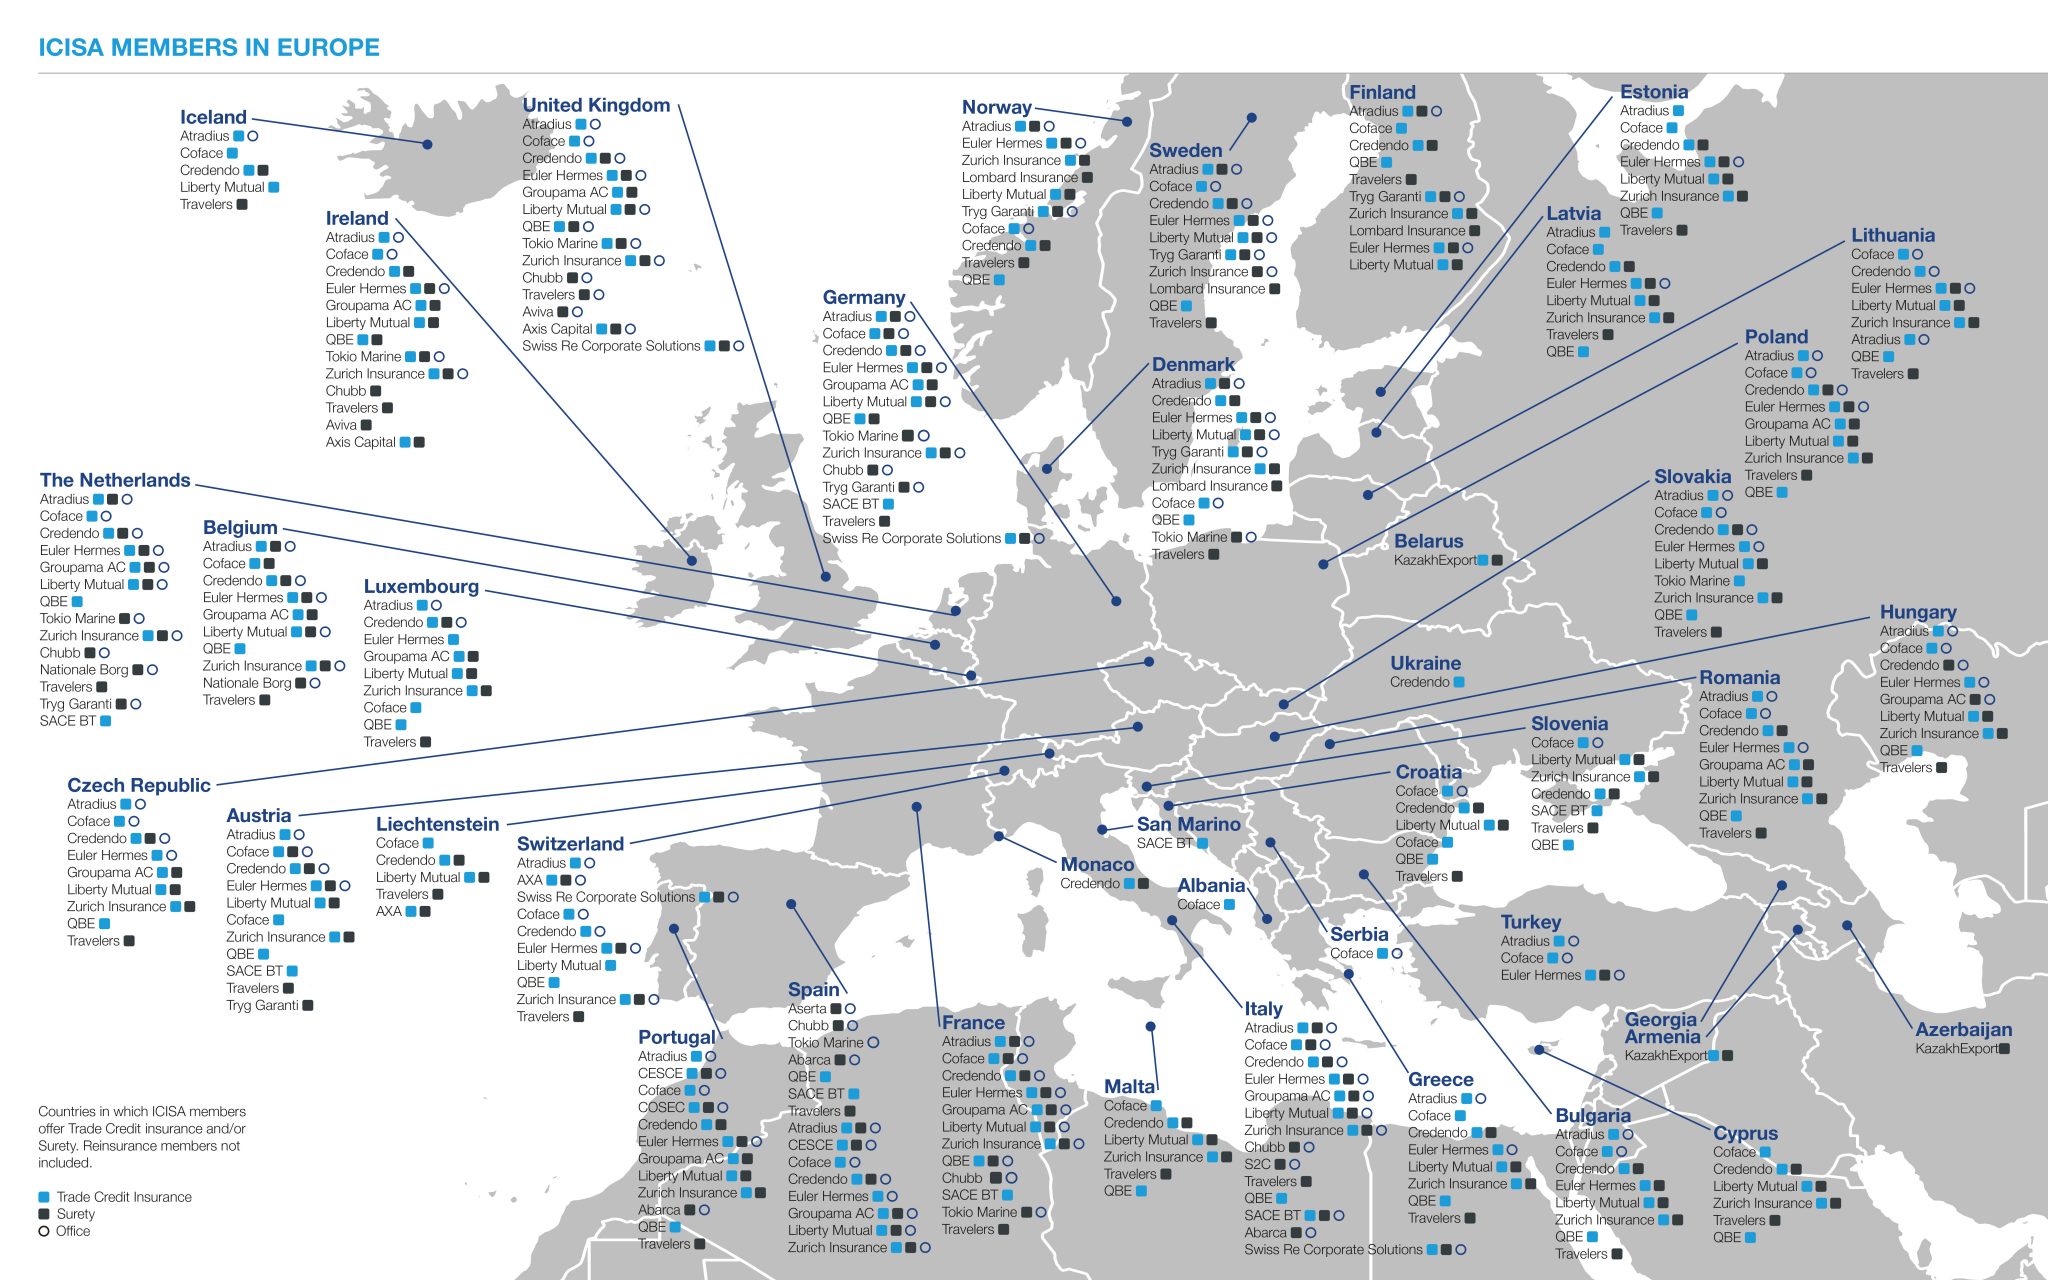 ICISA Members in Europe scaled 1